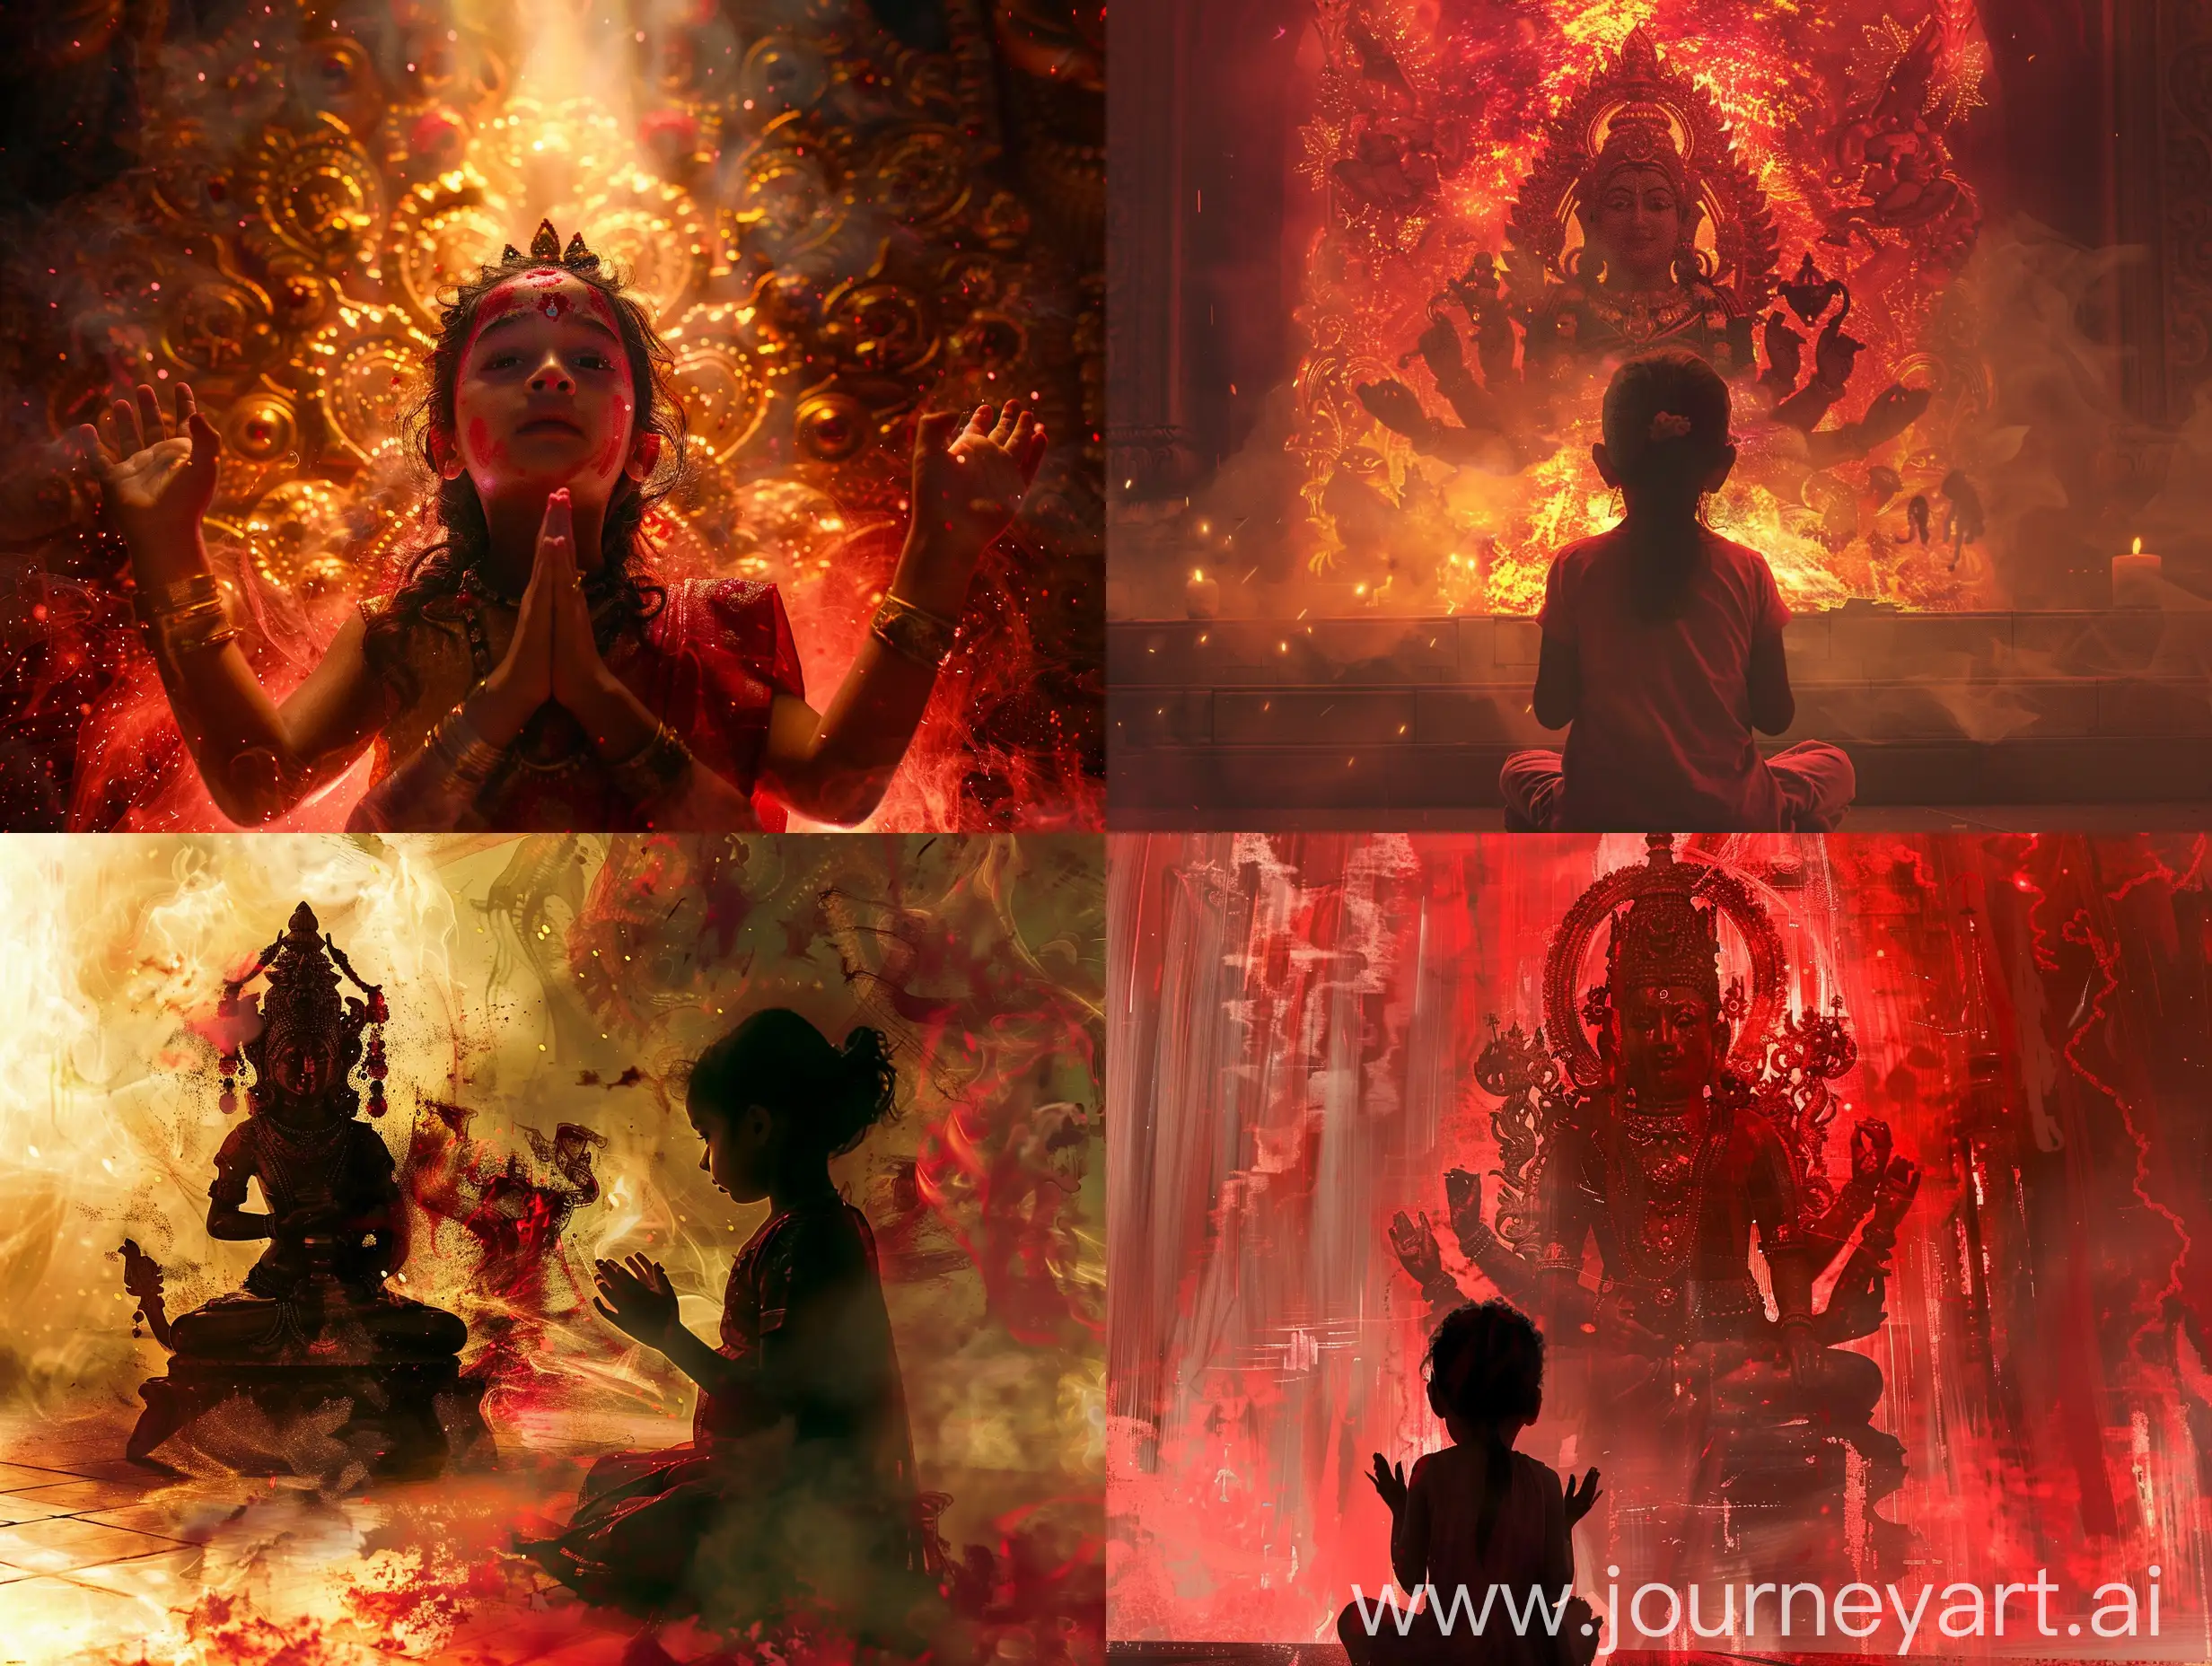 Child-Worshipping-Feminine-Durga-Devi-Idol-in-Reddish-Atmosphere